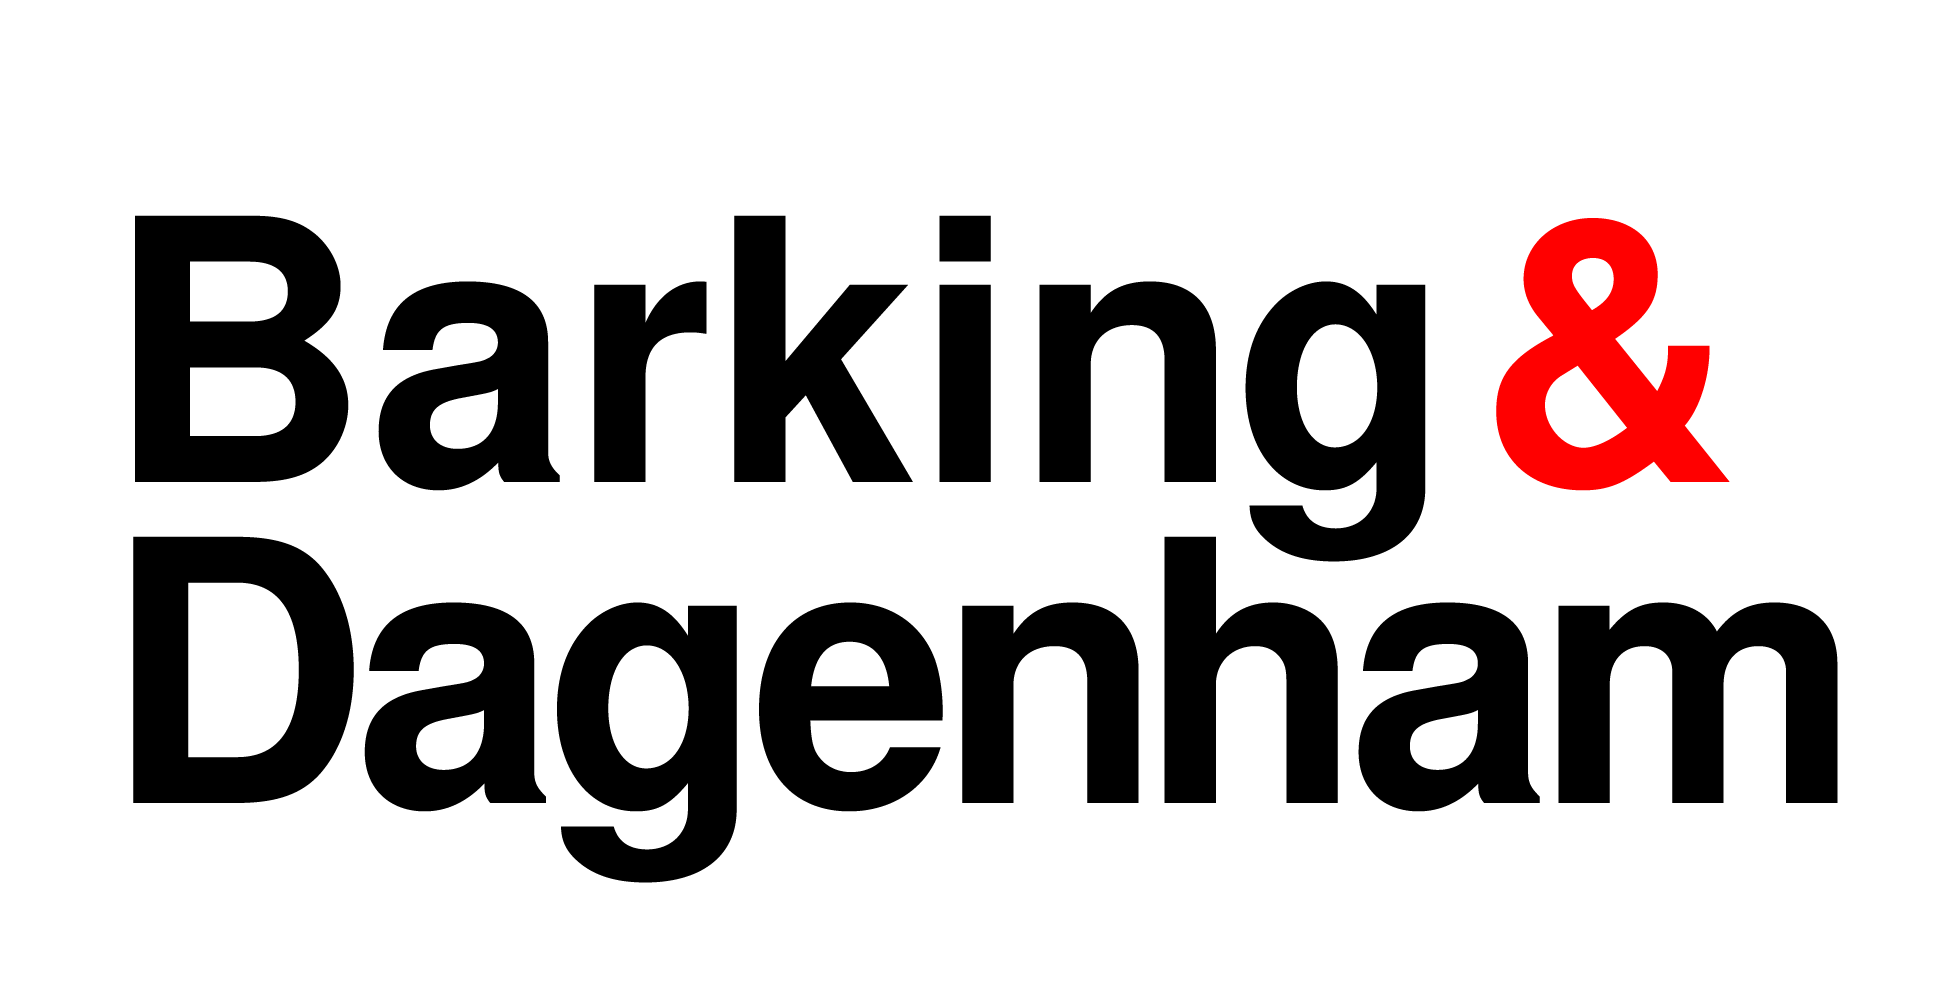 Team member, London Borough of Barking and Dagenham